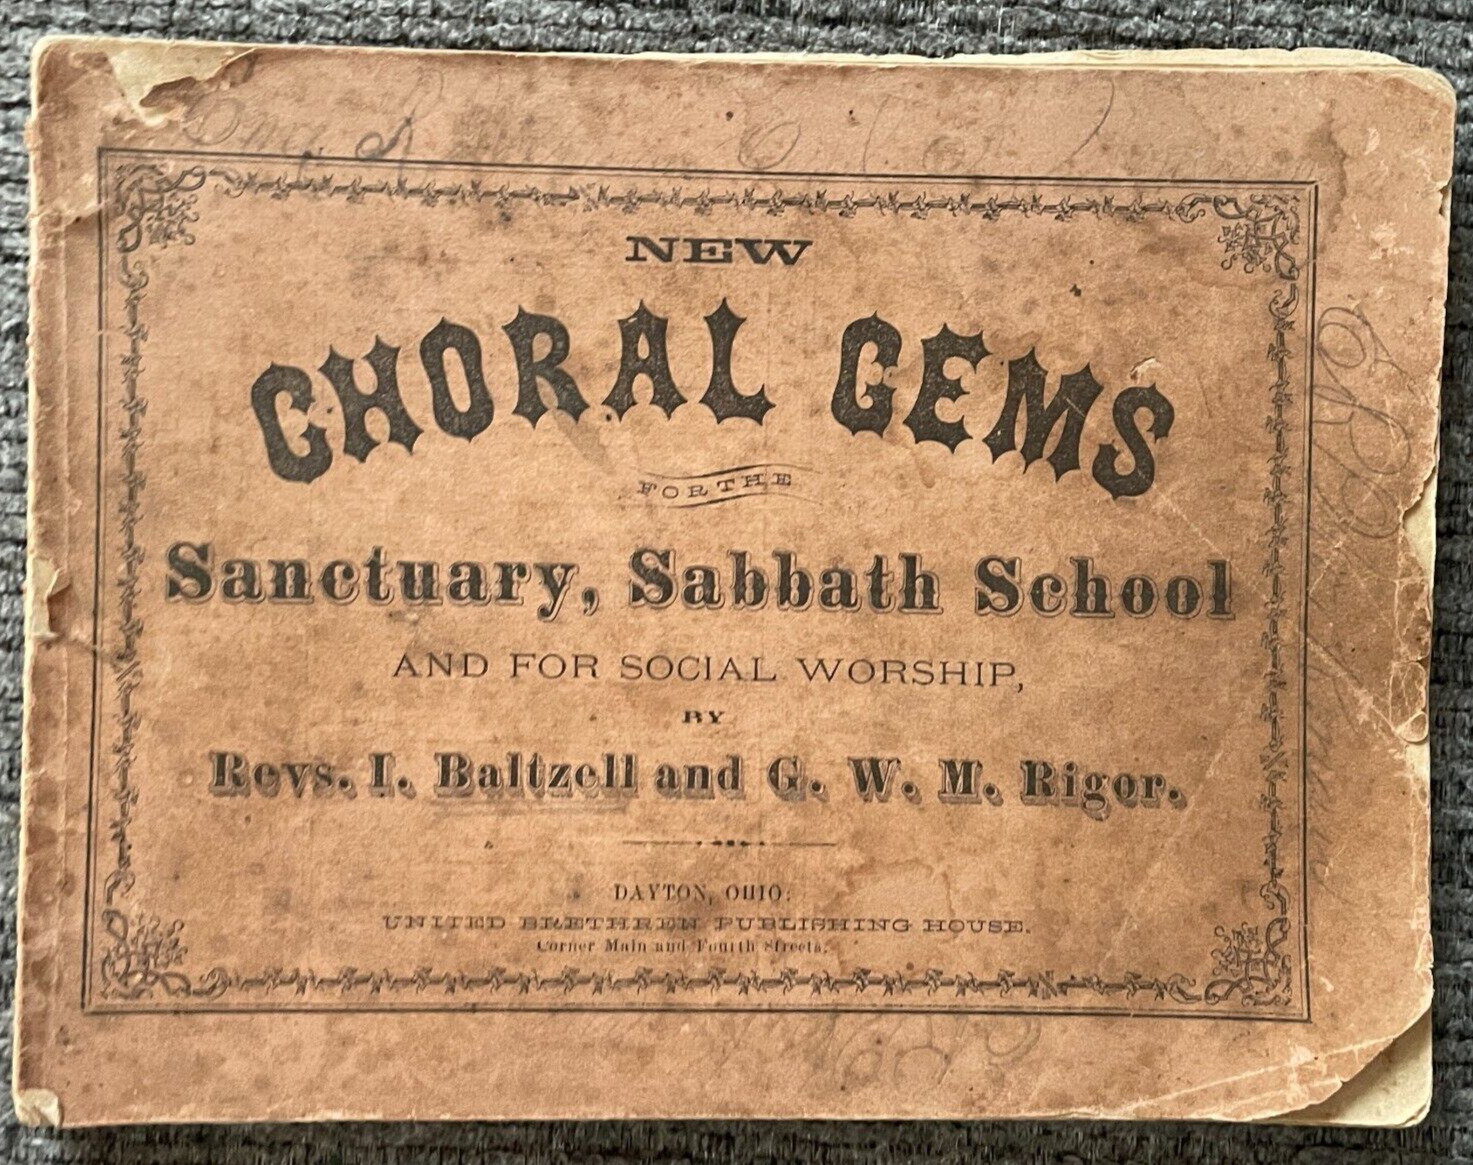 Antique 1872 Sanctuary, Sabbath School Choral Gems Song Book for Social Worship